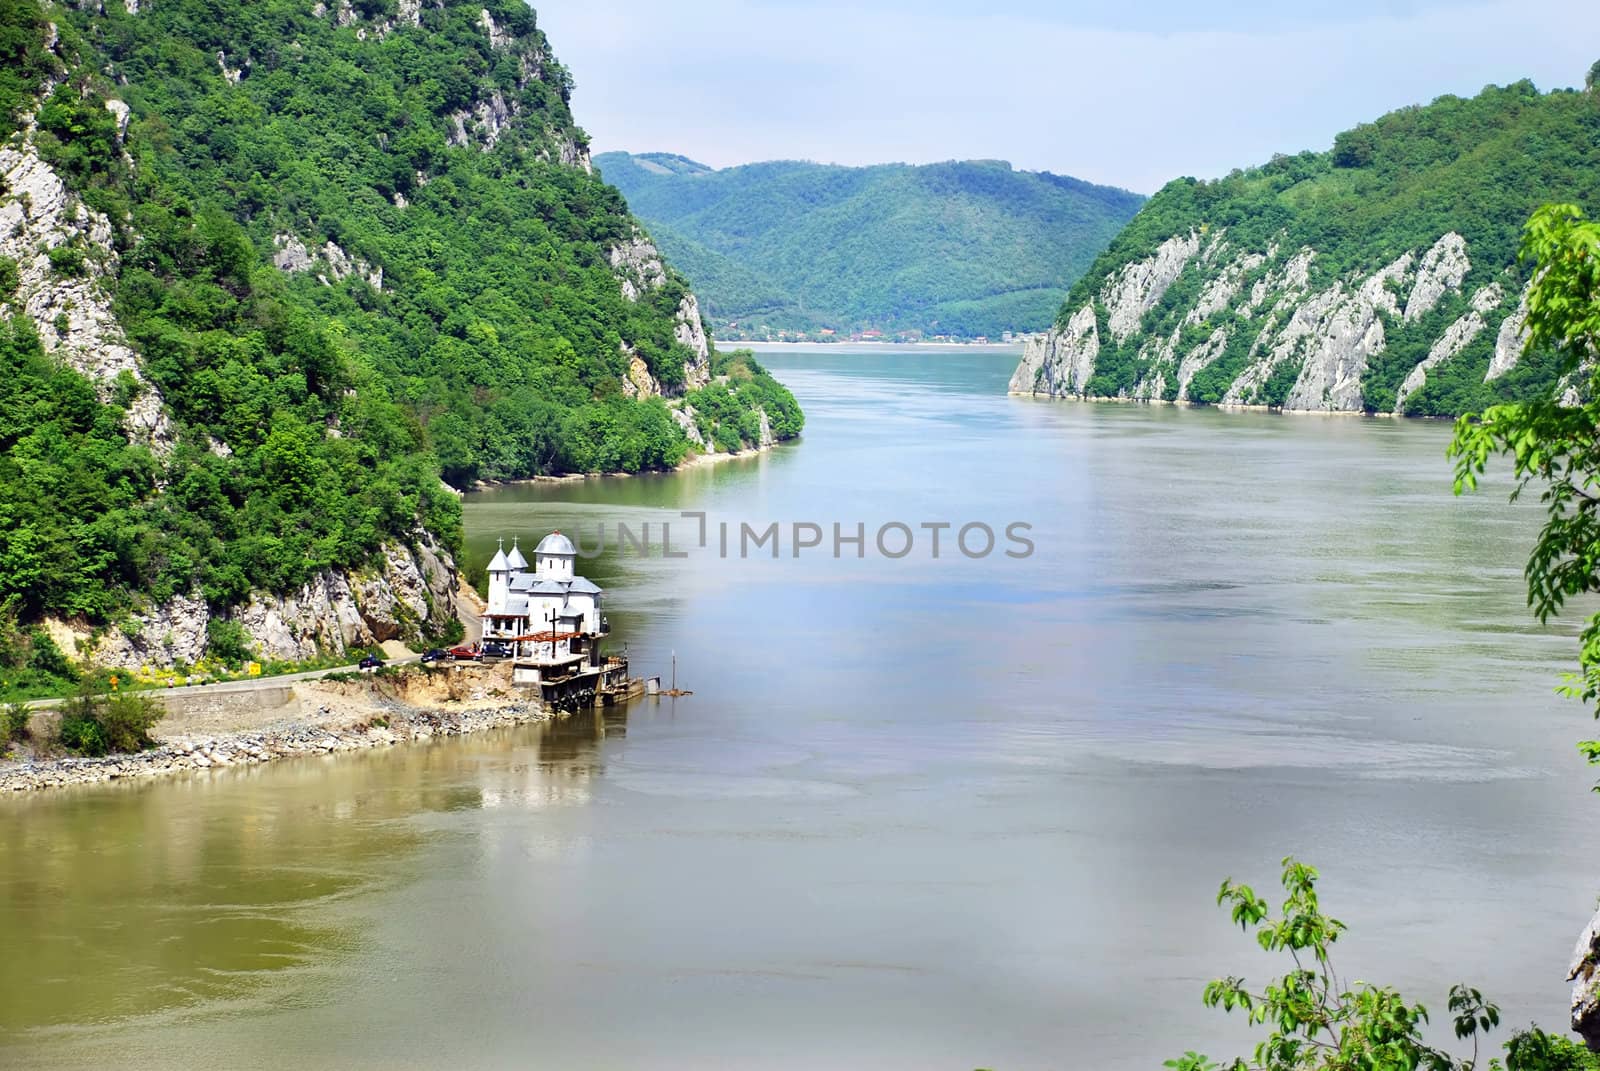 Scenic Danube value between Serbia and Romania